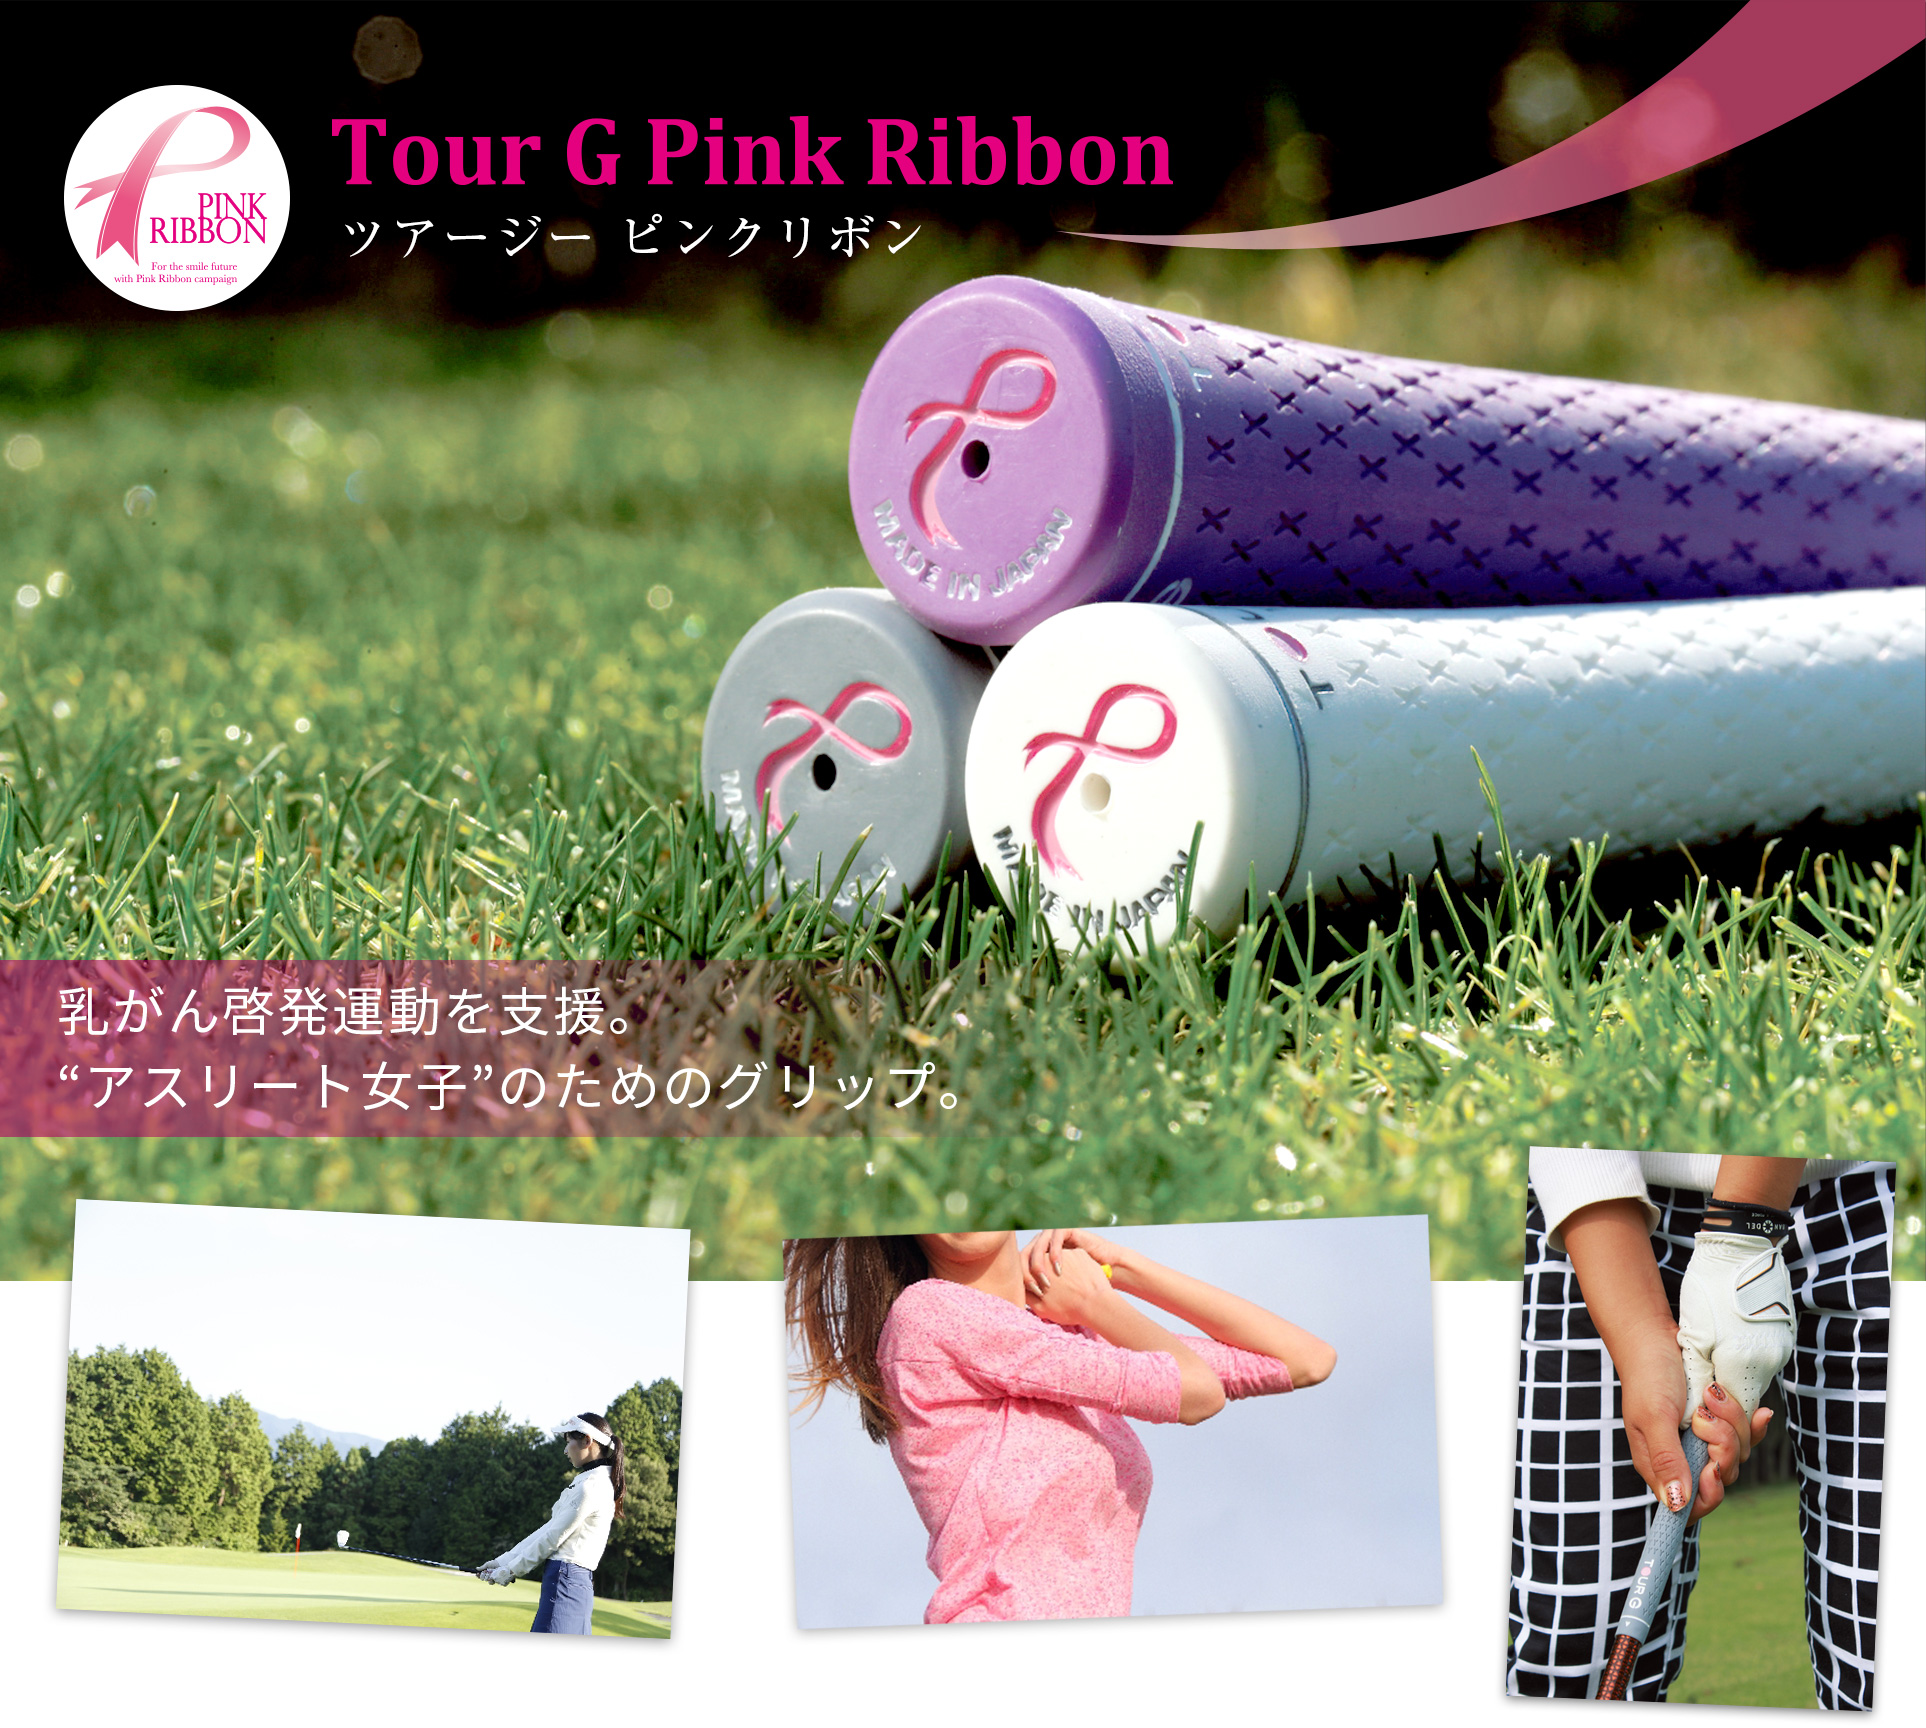 Tour G Pink Ribbon ツアージーピンクリボン：乳がん啓発運動を支援。 “アスリート女子”のためのグリップ。